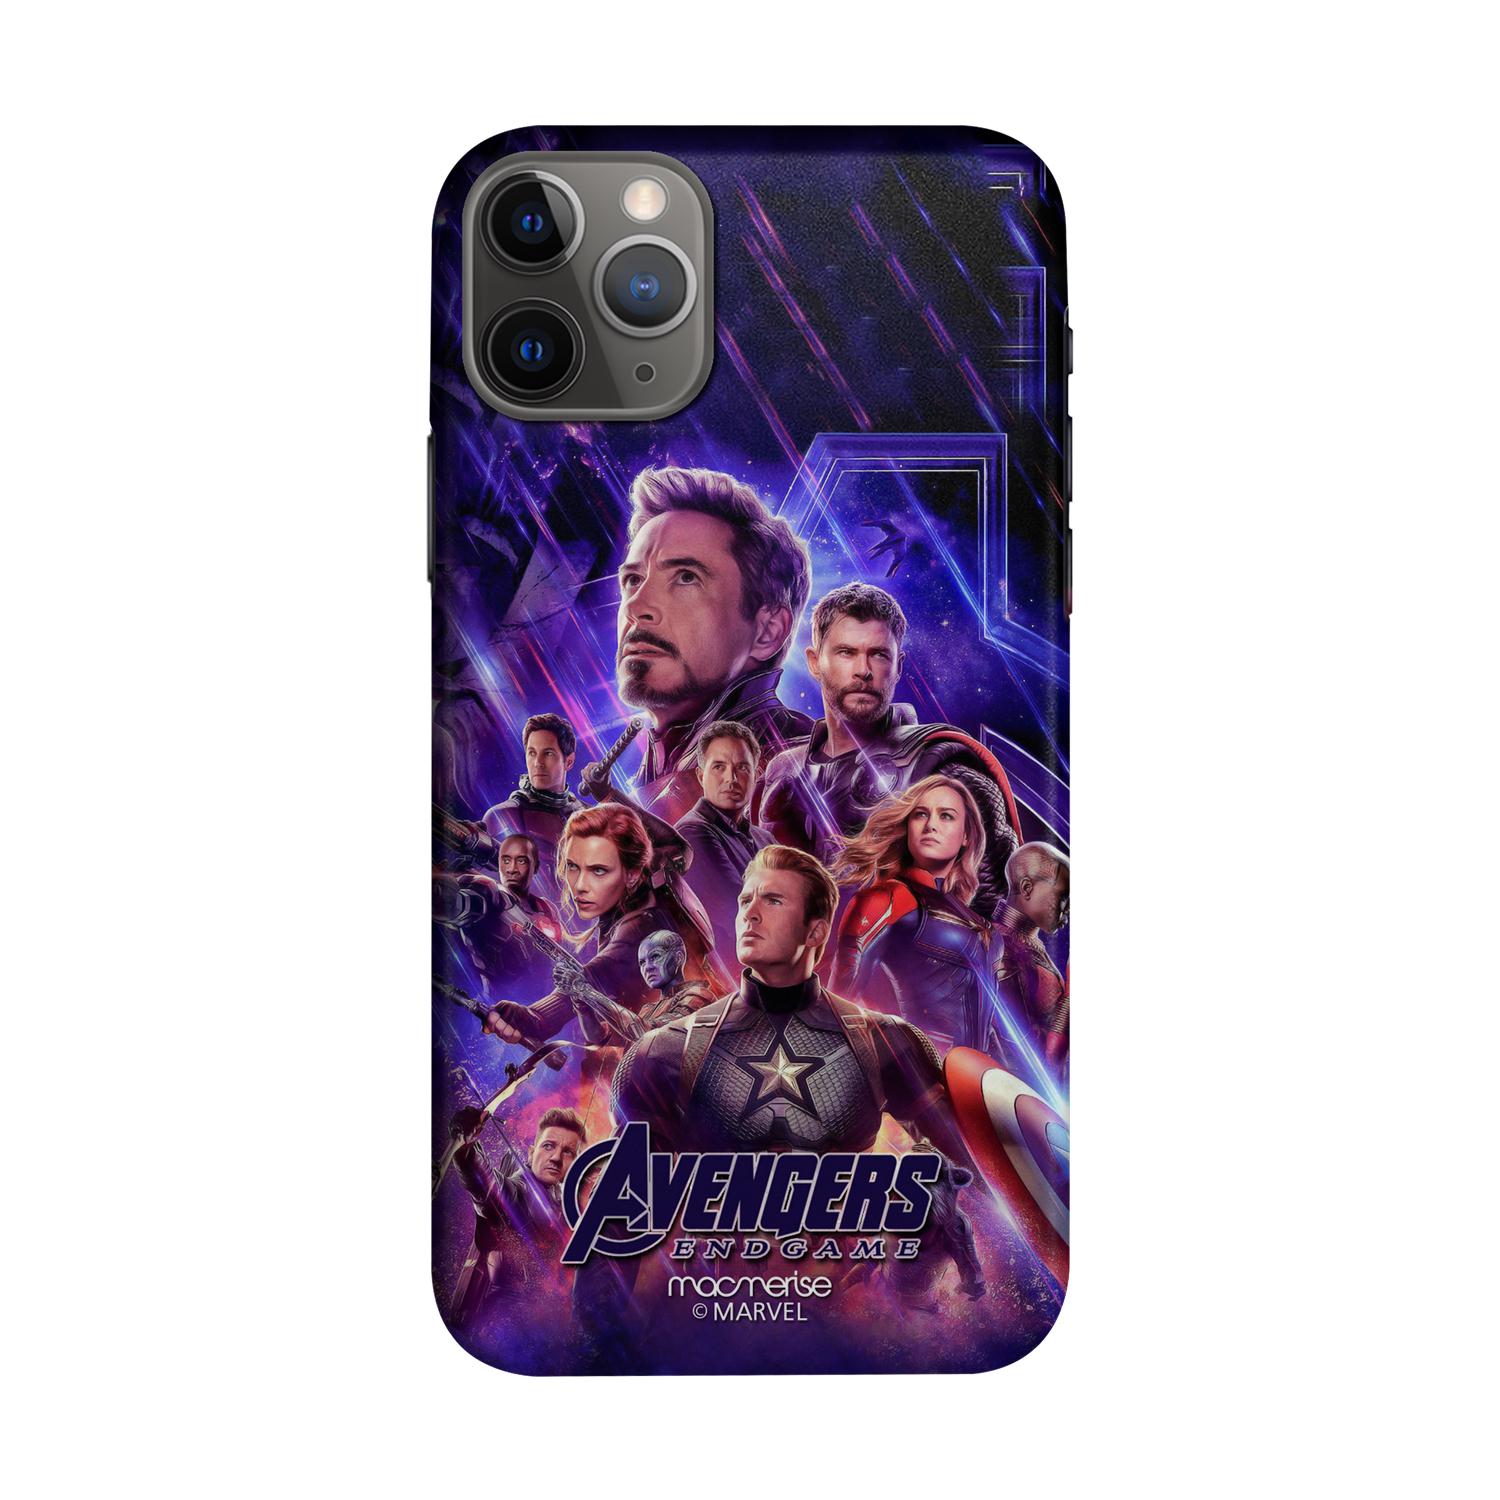 Buy Avengers Endgame Poster - Sleek Phone Case for iPhone 11 Pro Max Online